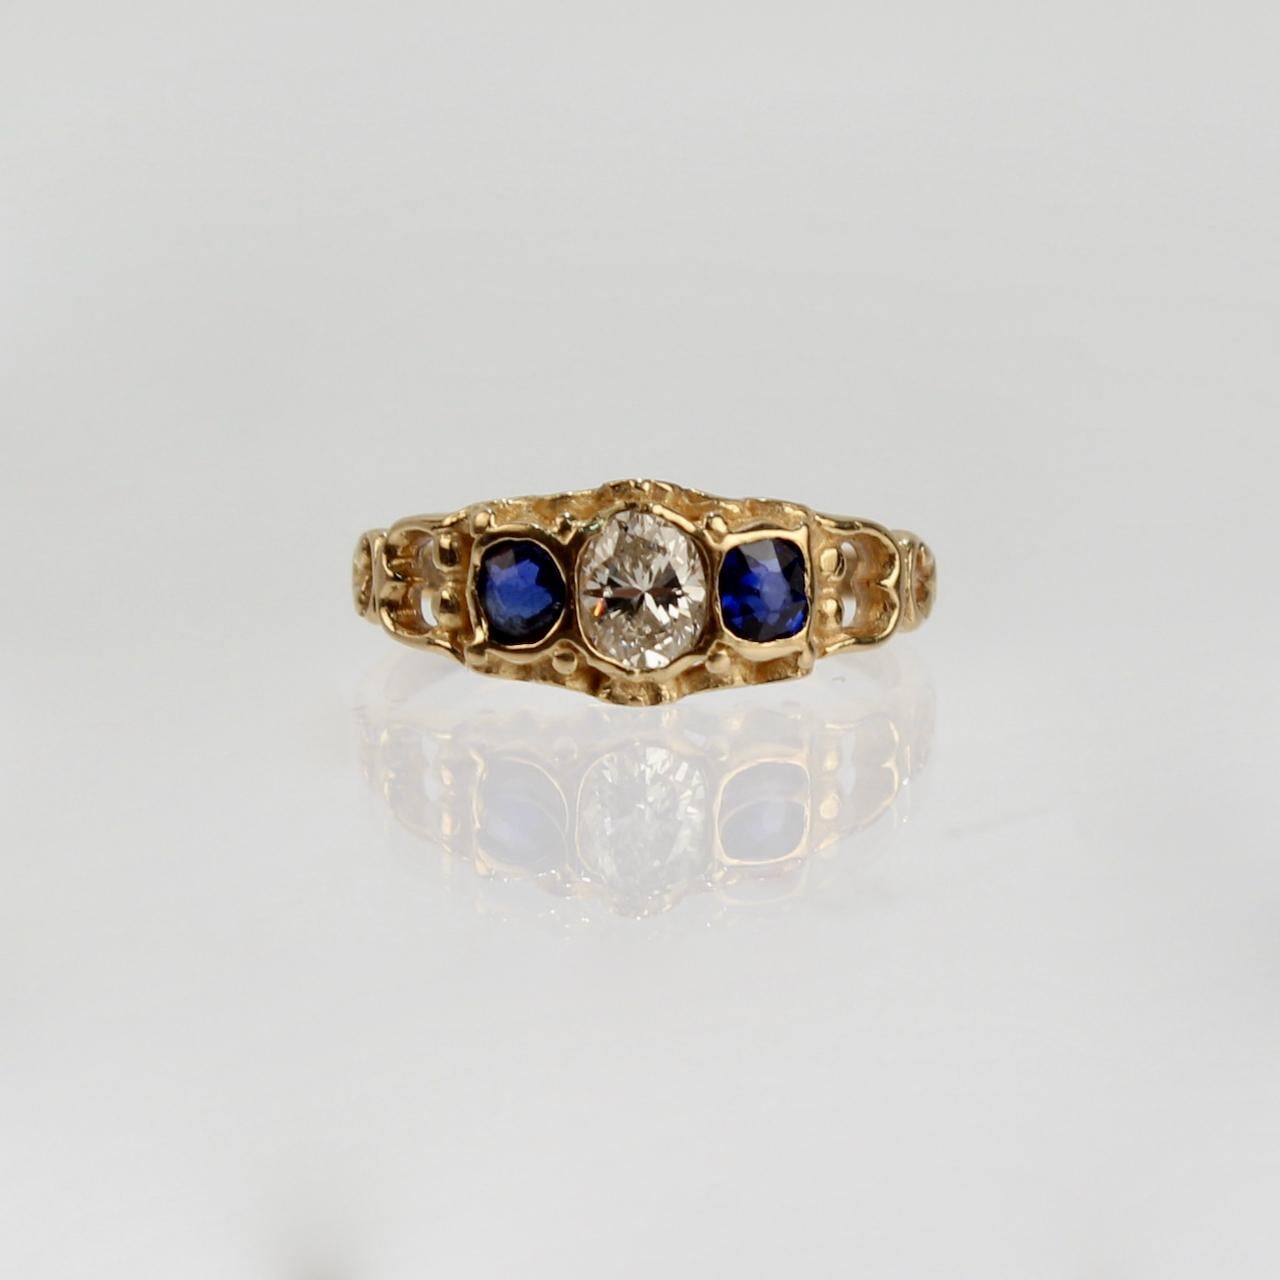 Oval Cut Antique English 18 Karat Gold, Sapphire, and Diamond Ring